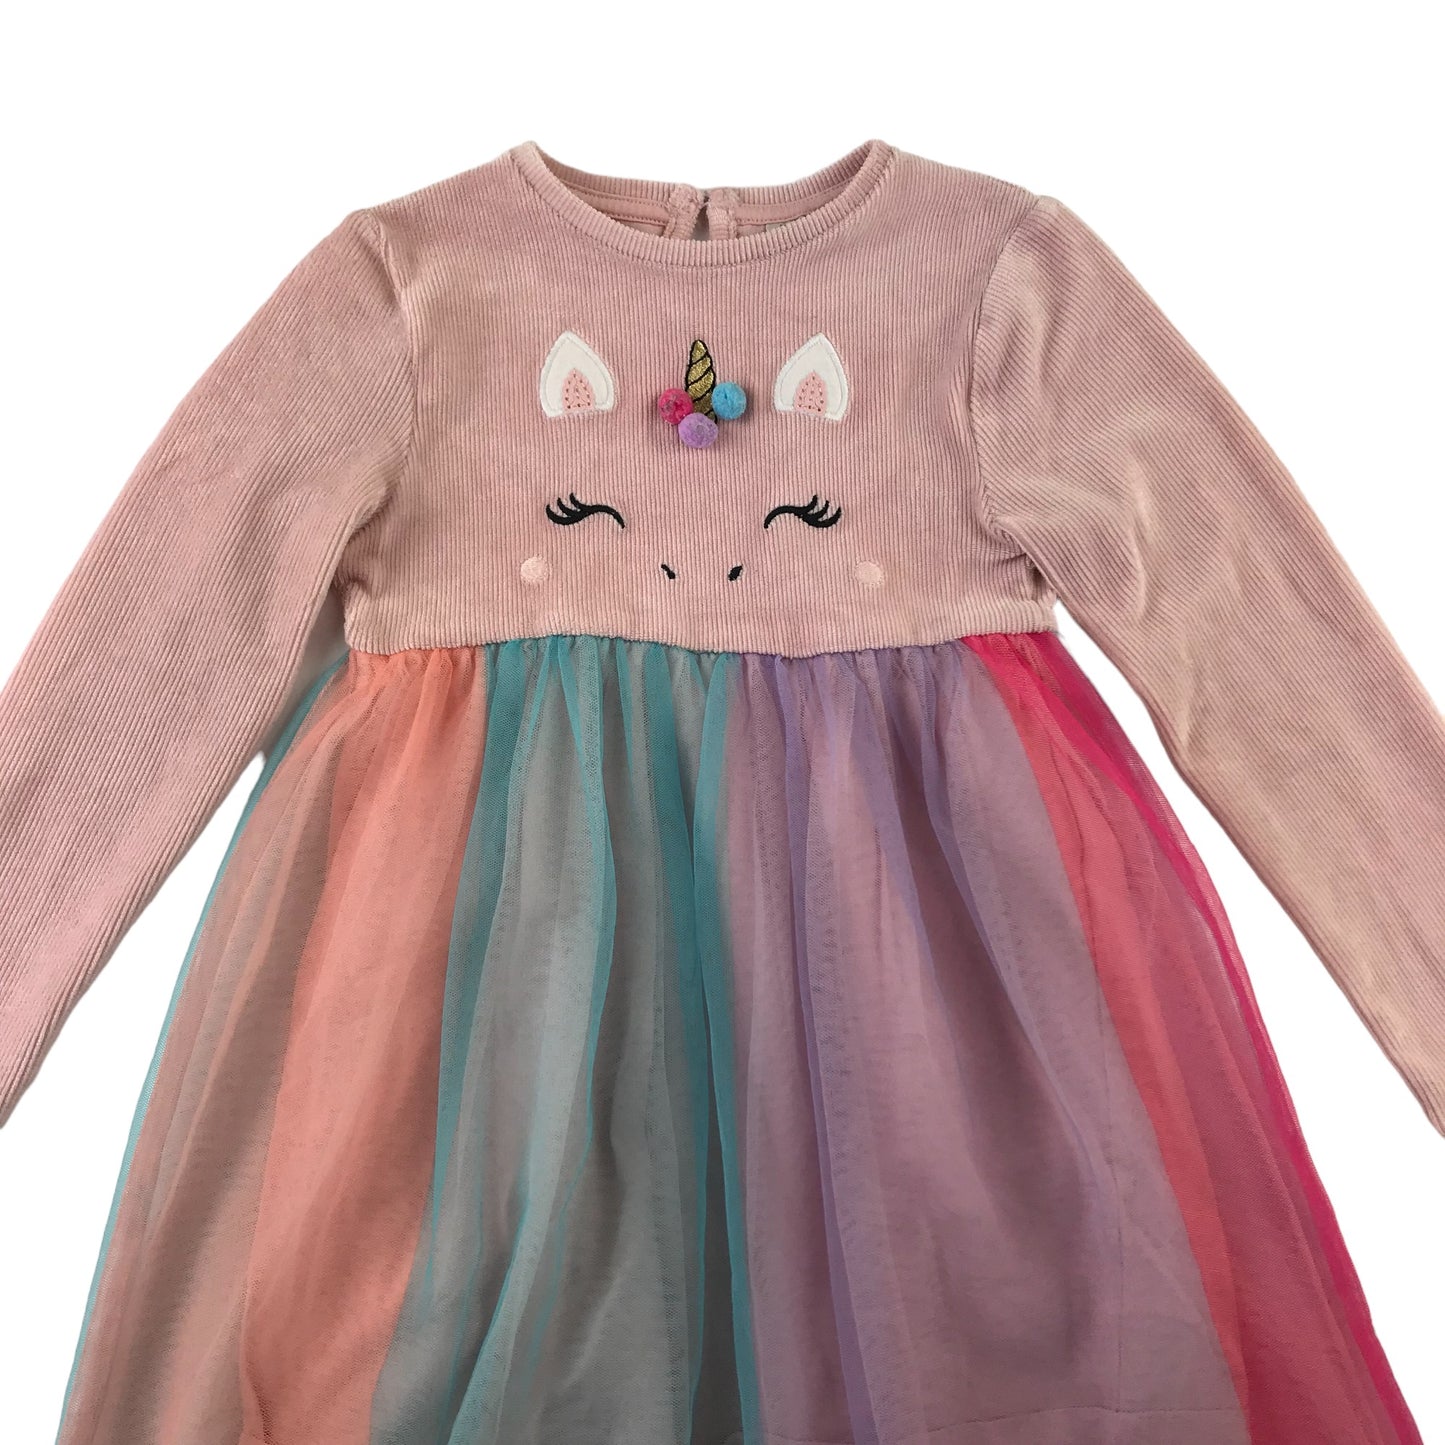 F&F dress 4-5 years pink unicorn pastel tulle skirt